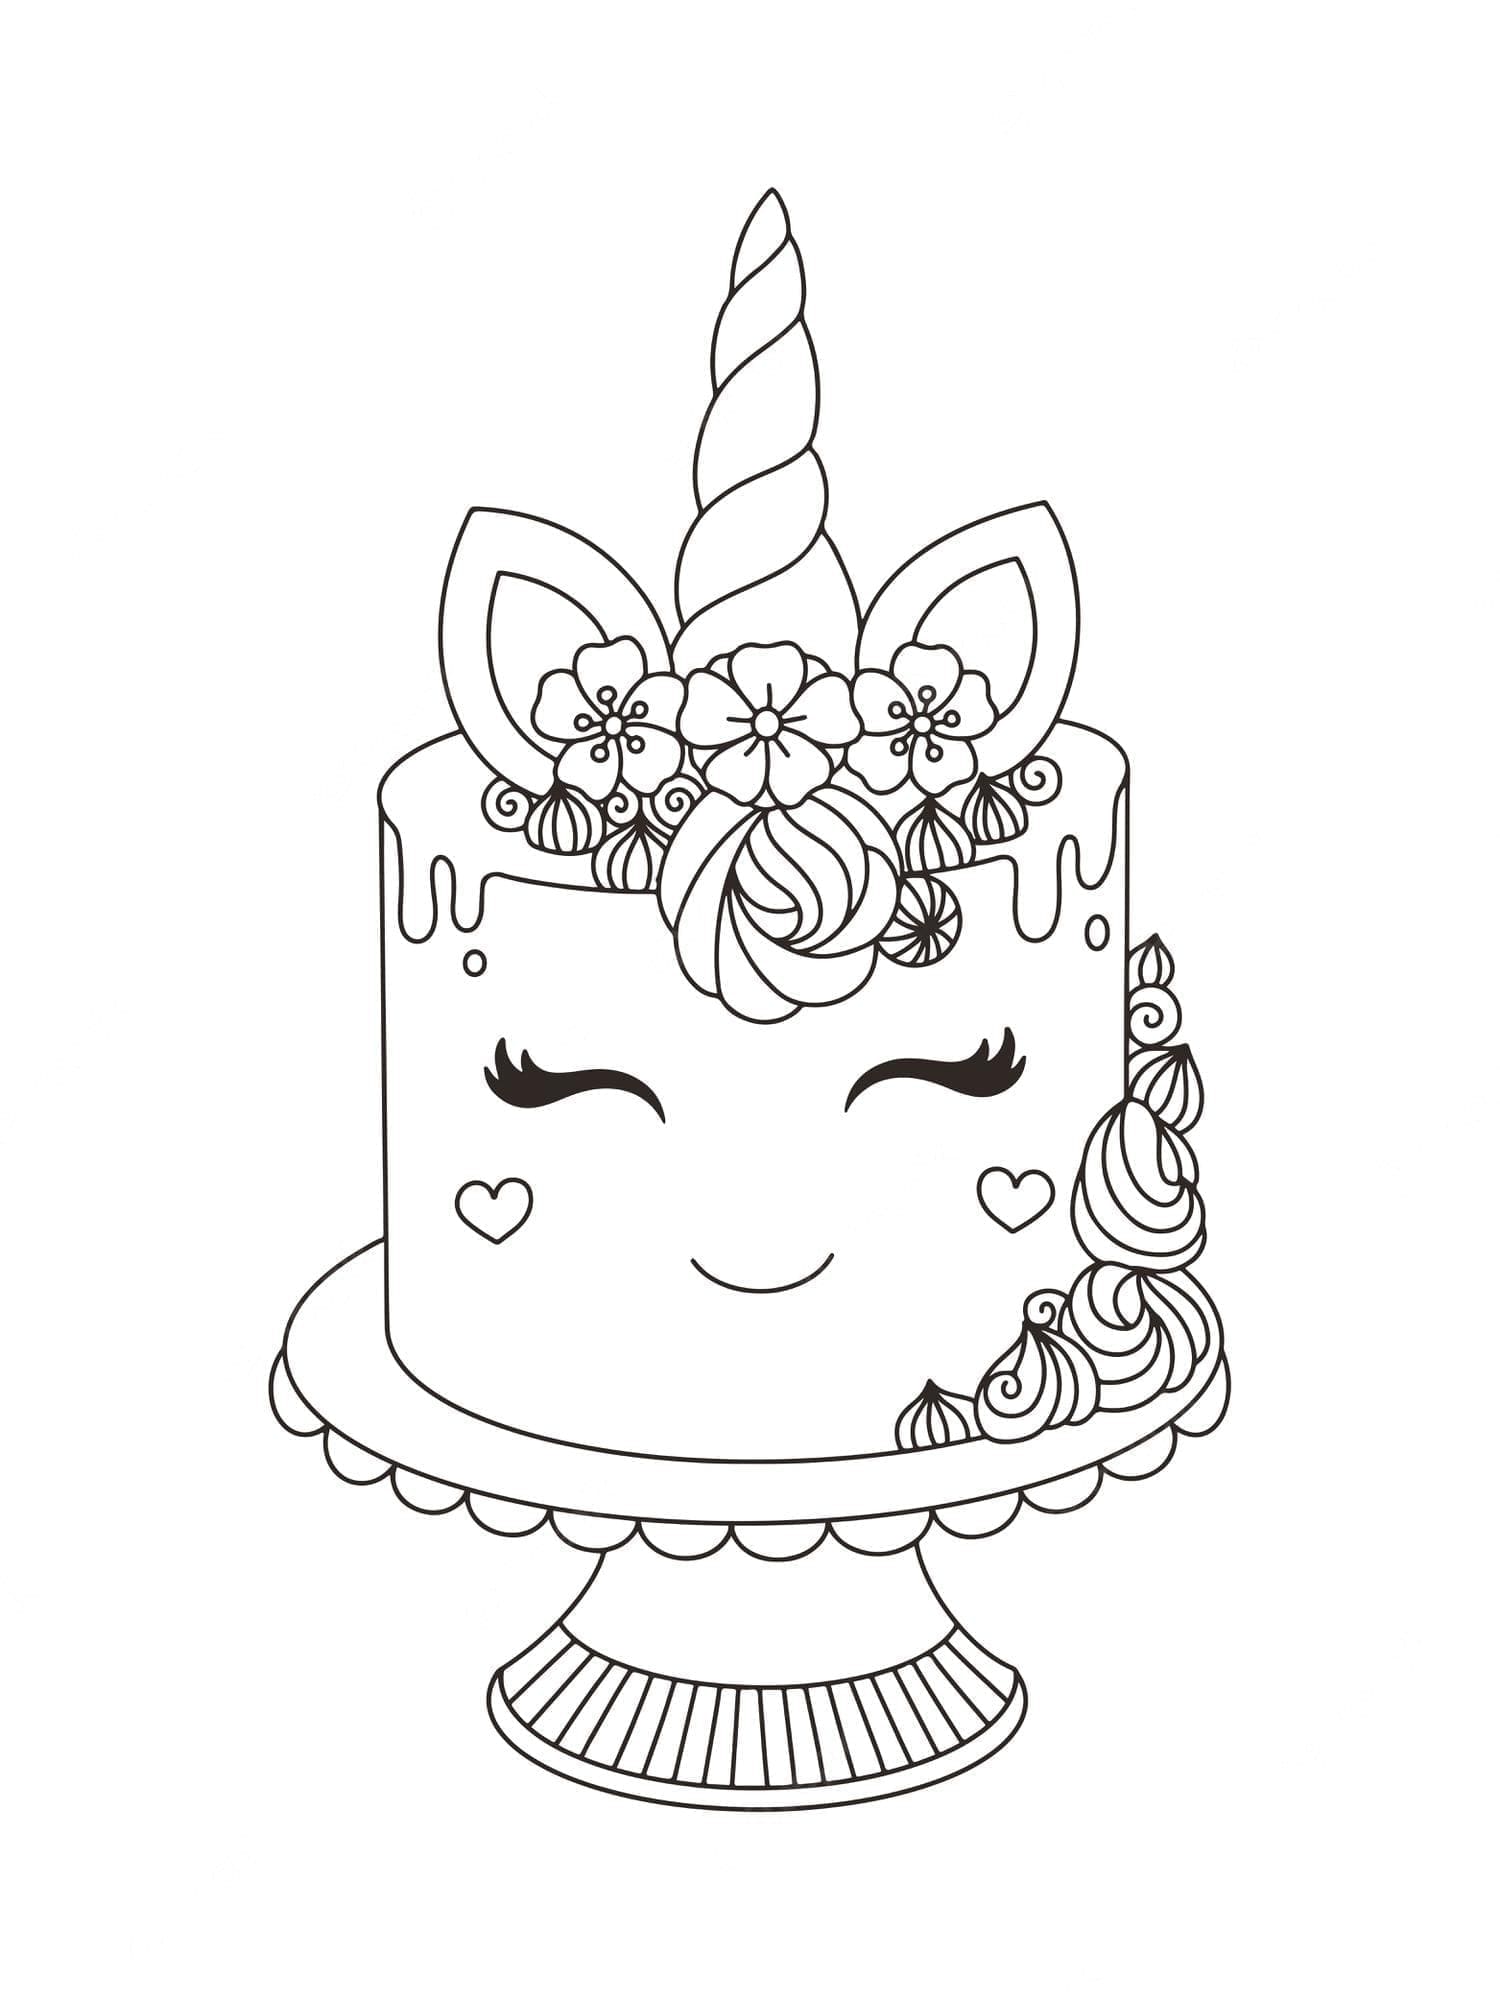 Dessin de Gâteau Licorne coloring page